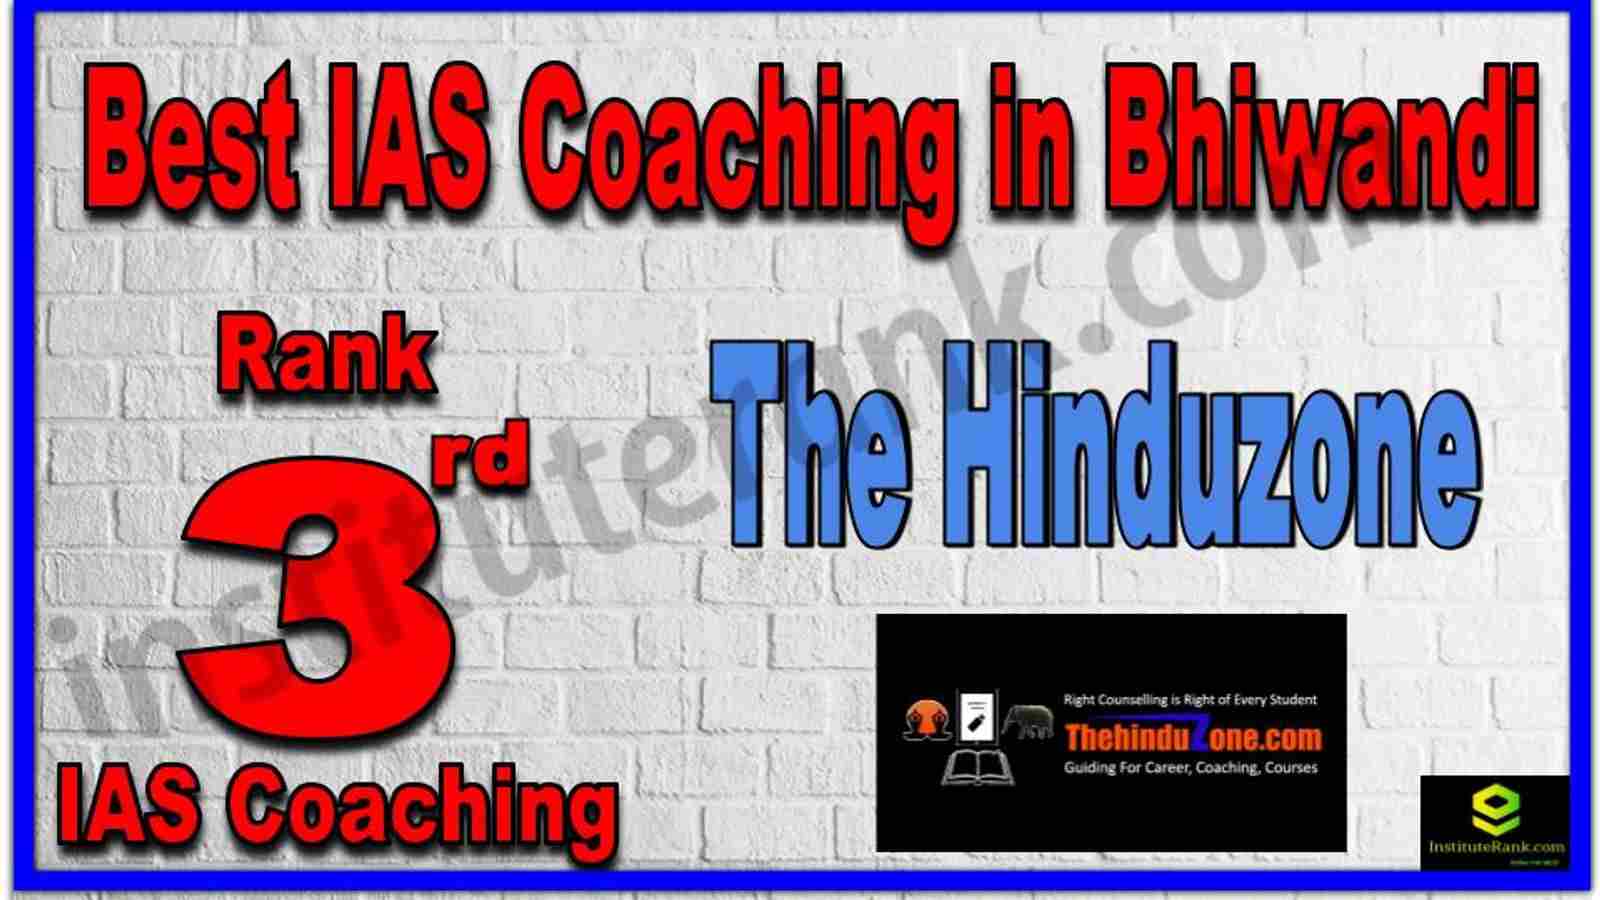 Rank 3rd Best IAS Coaching in Bhiwandi